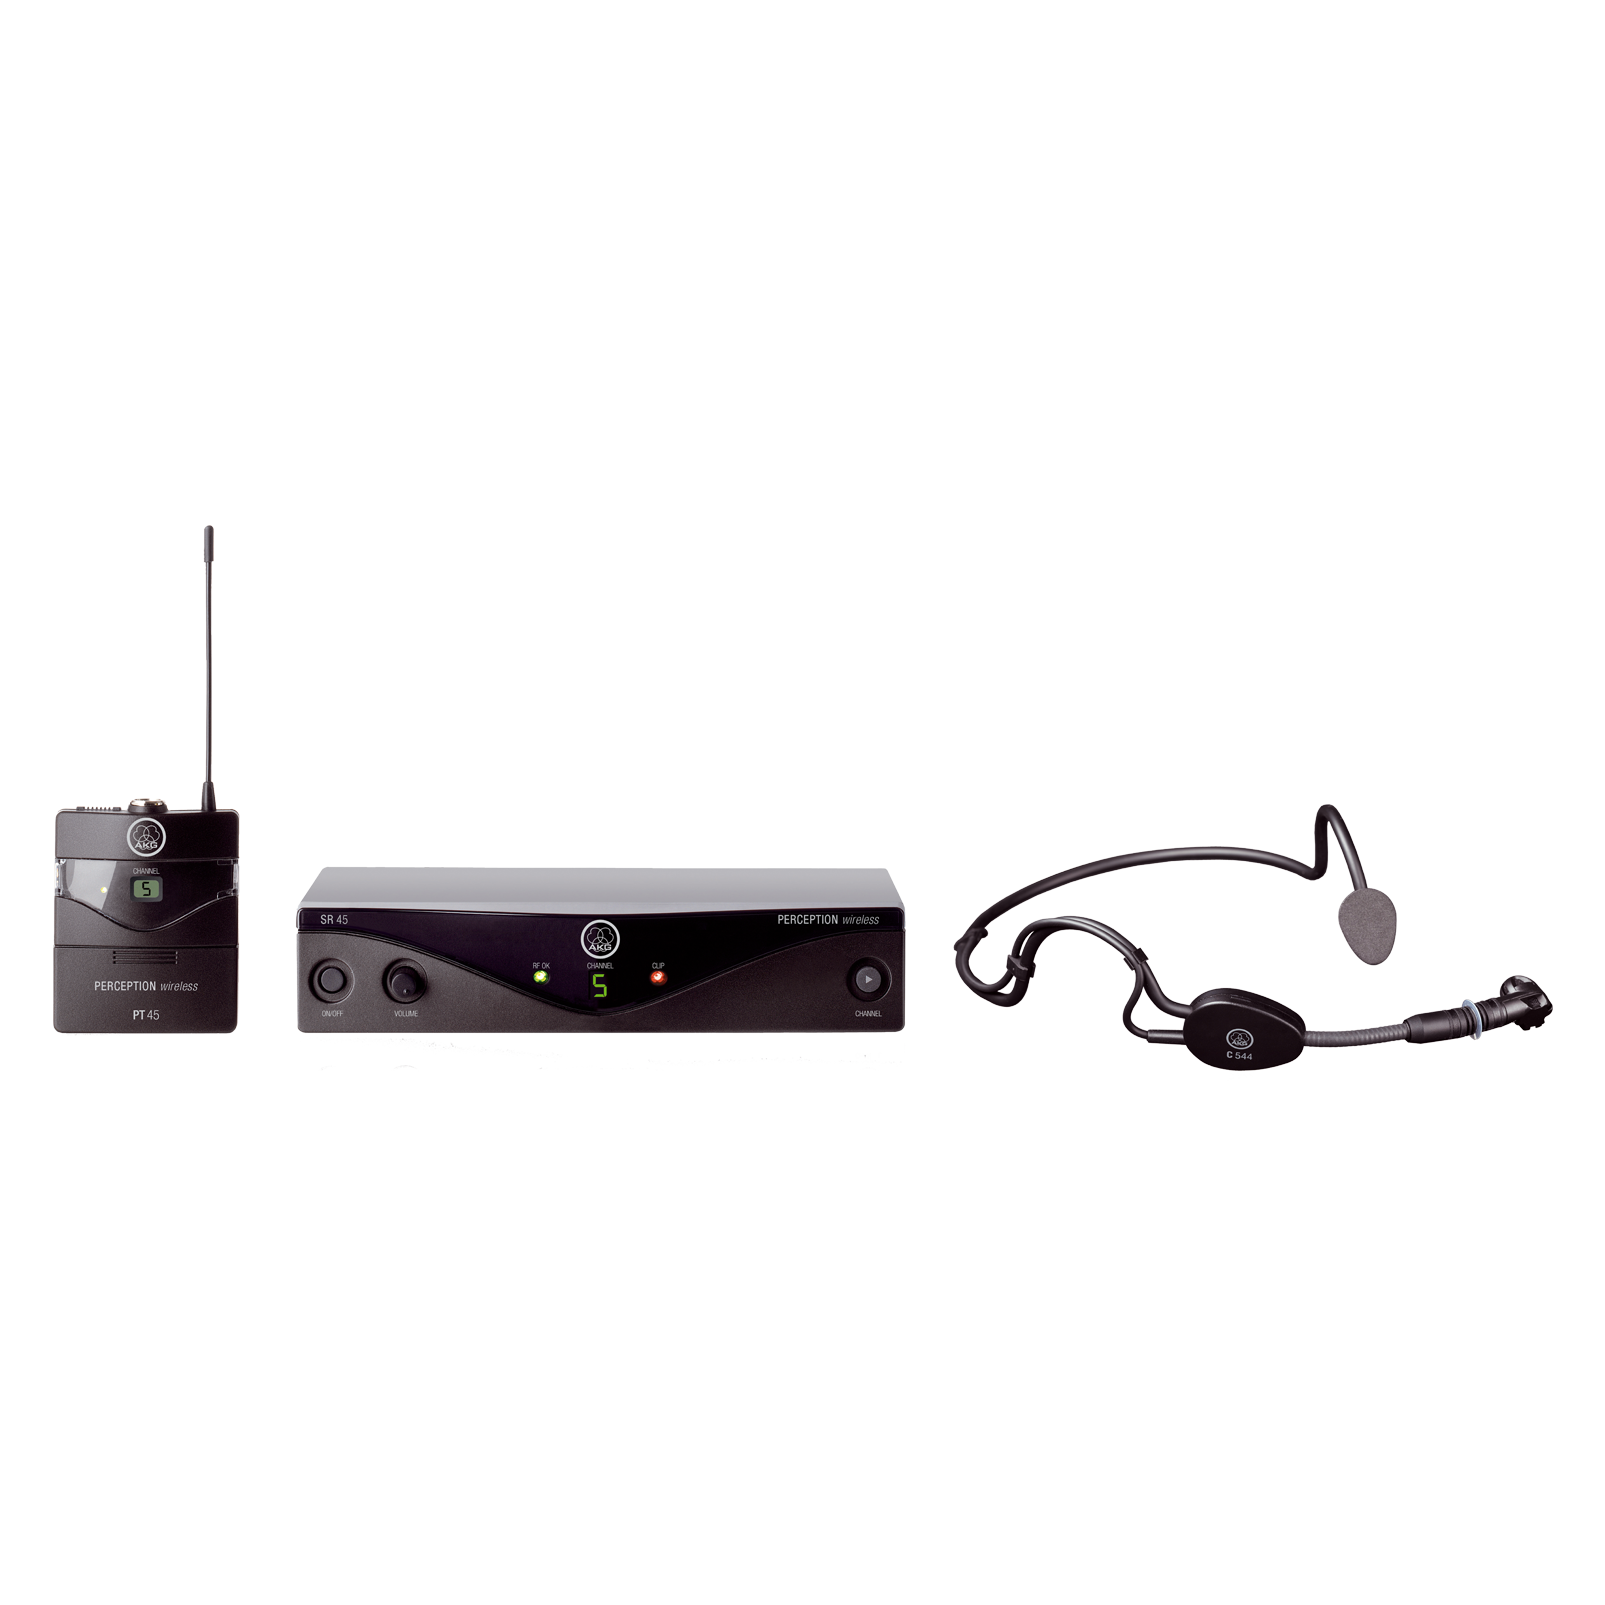 Perception Wireless 45 Sports Set Band-C2 - Black - High-performance wireless microphone system - Hero